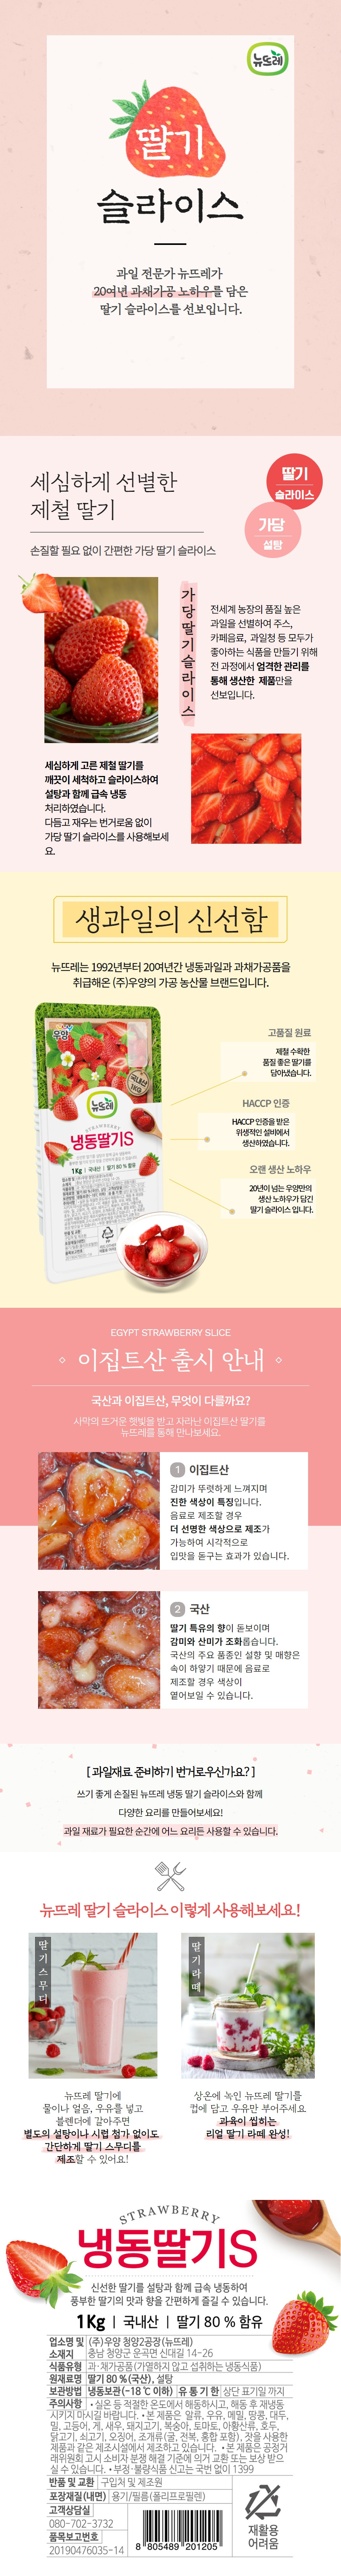 NDR_frozen_strawberry_S_korea